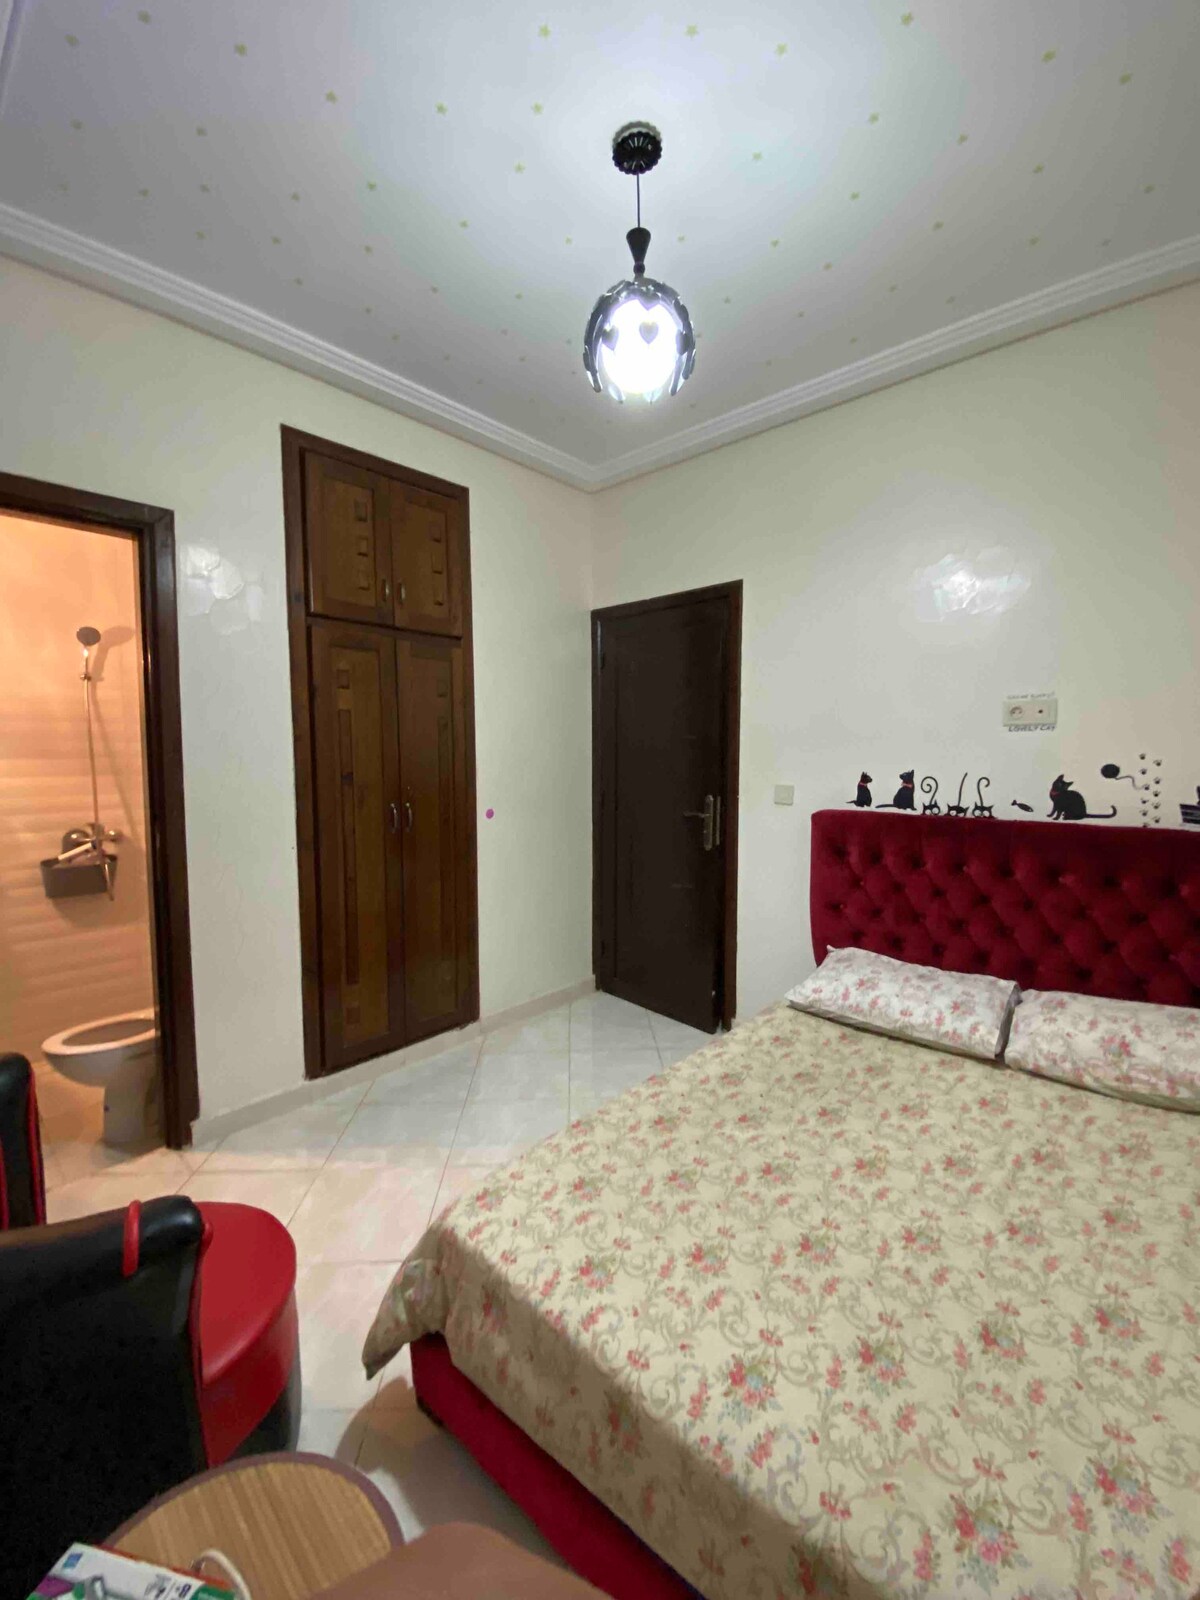 Lovely apartment in center of meknes